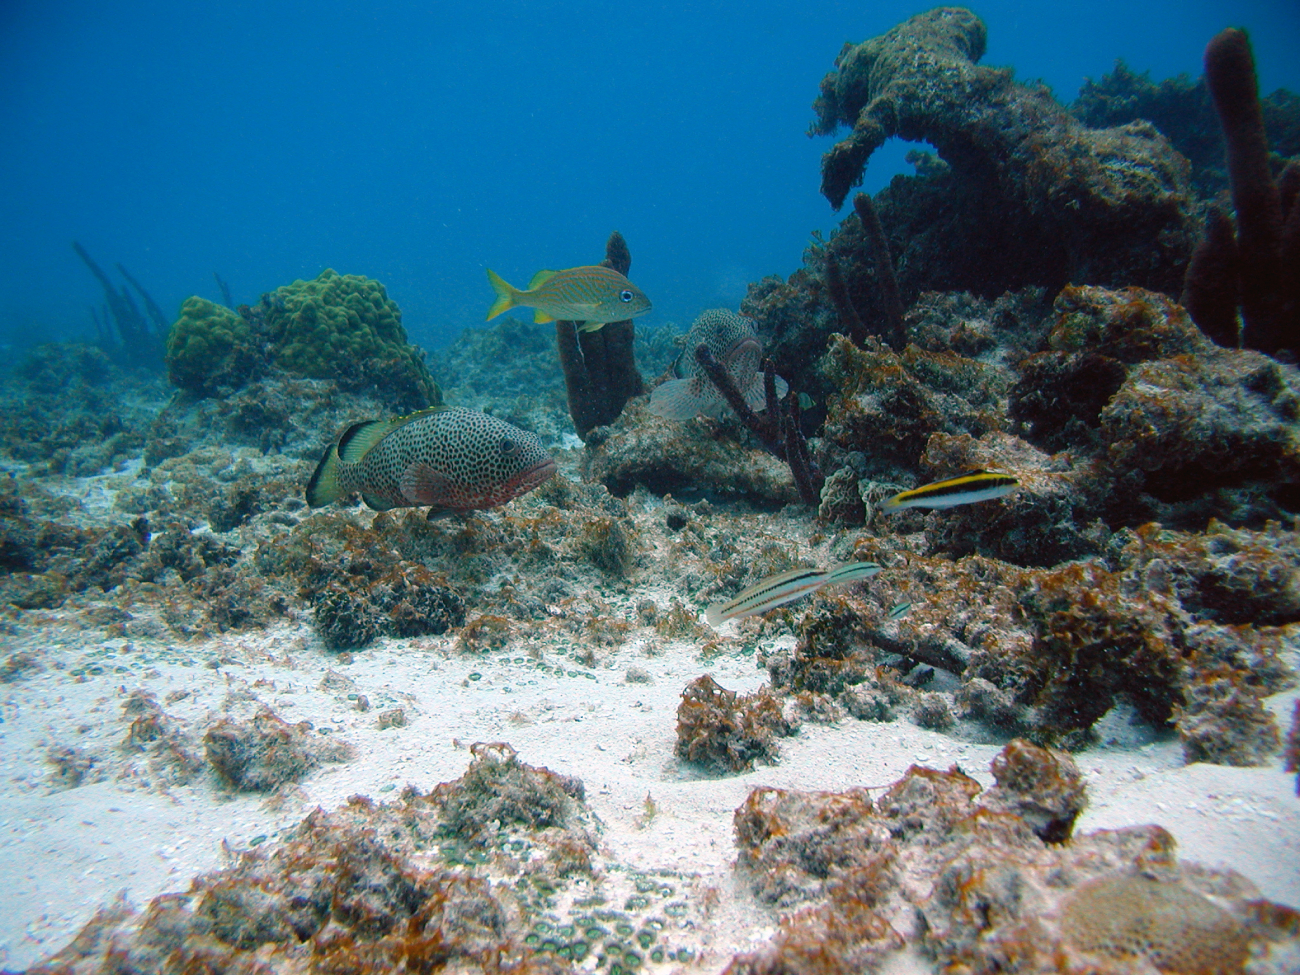 Red hind (Epinephelus guttatus), slippery dick (Halichoeres bivittatus), Frenchgrunt (Haemulon flavolineatum), bluehead (Thalassoma bifasciatum), and mustardhill coral (Porites astreoides)